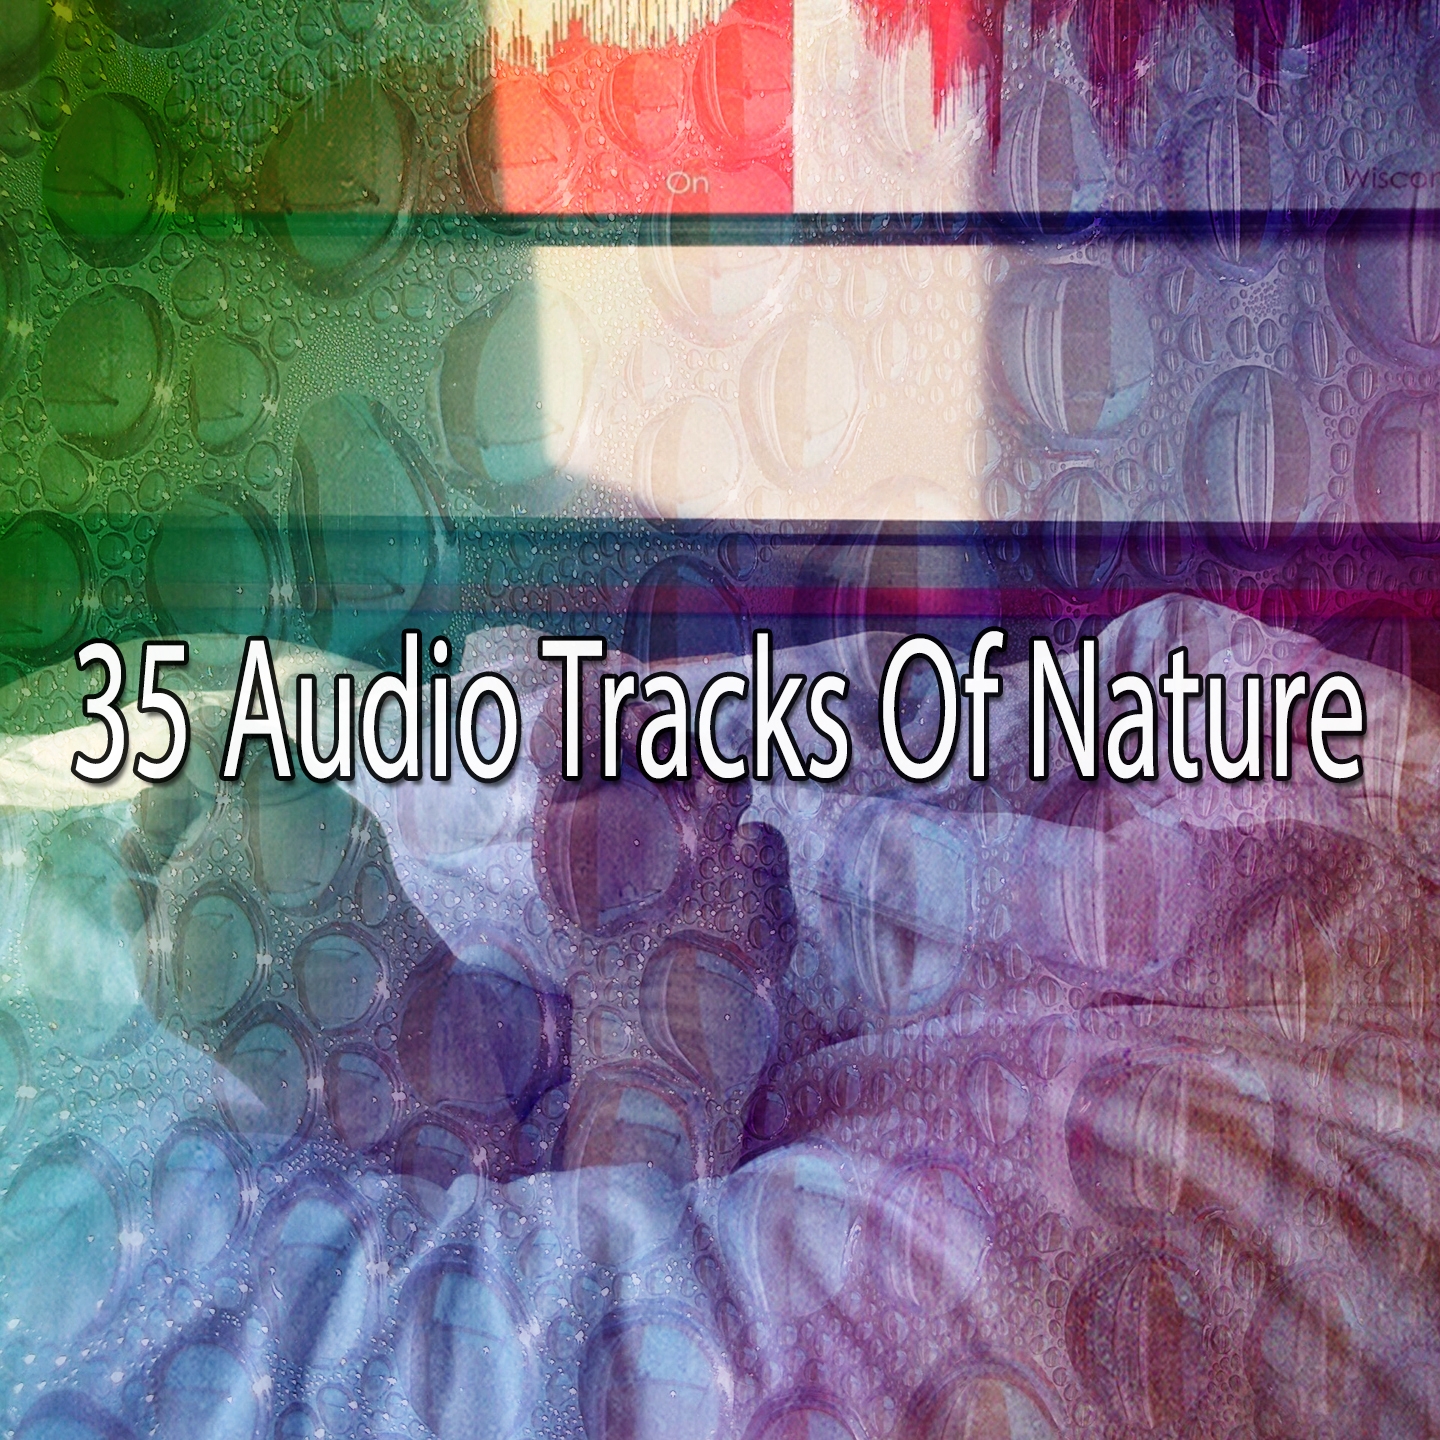 35 Audio Tracks Of Nature